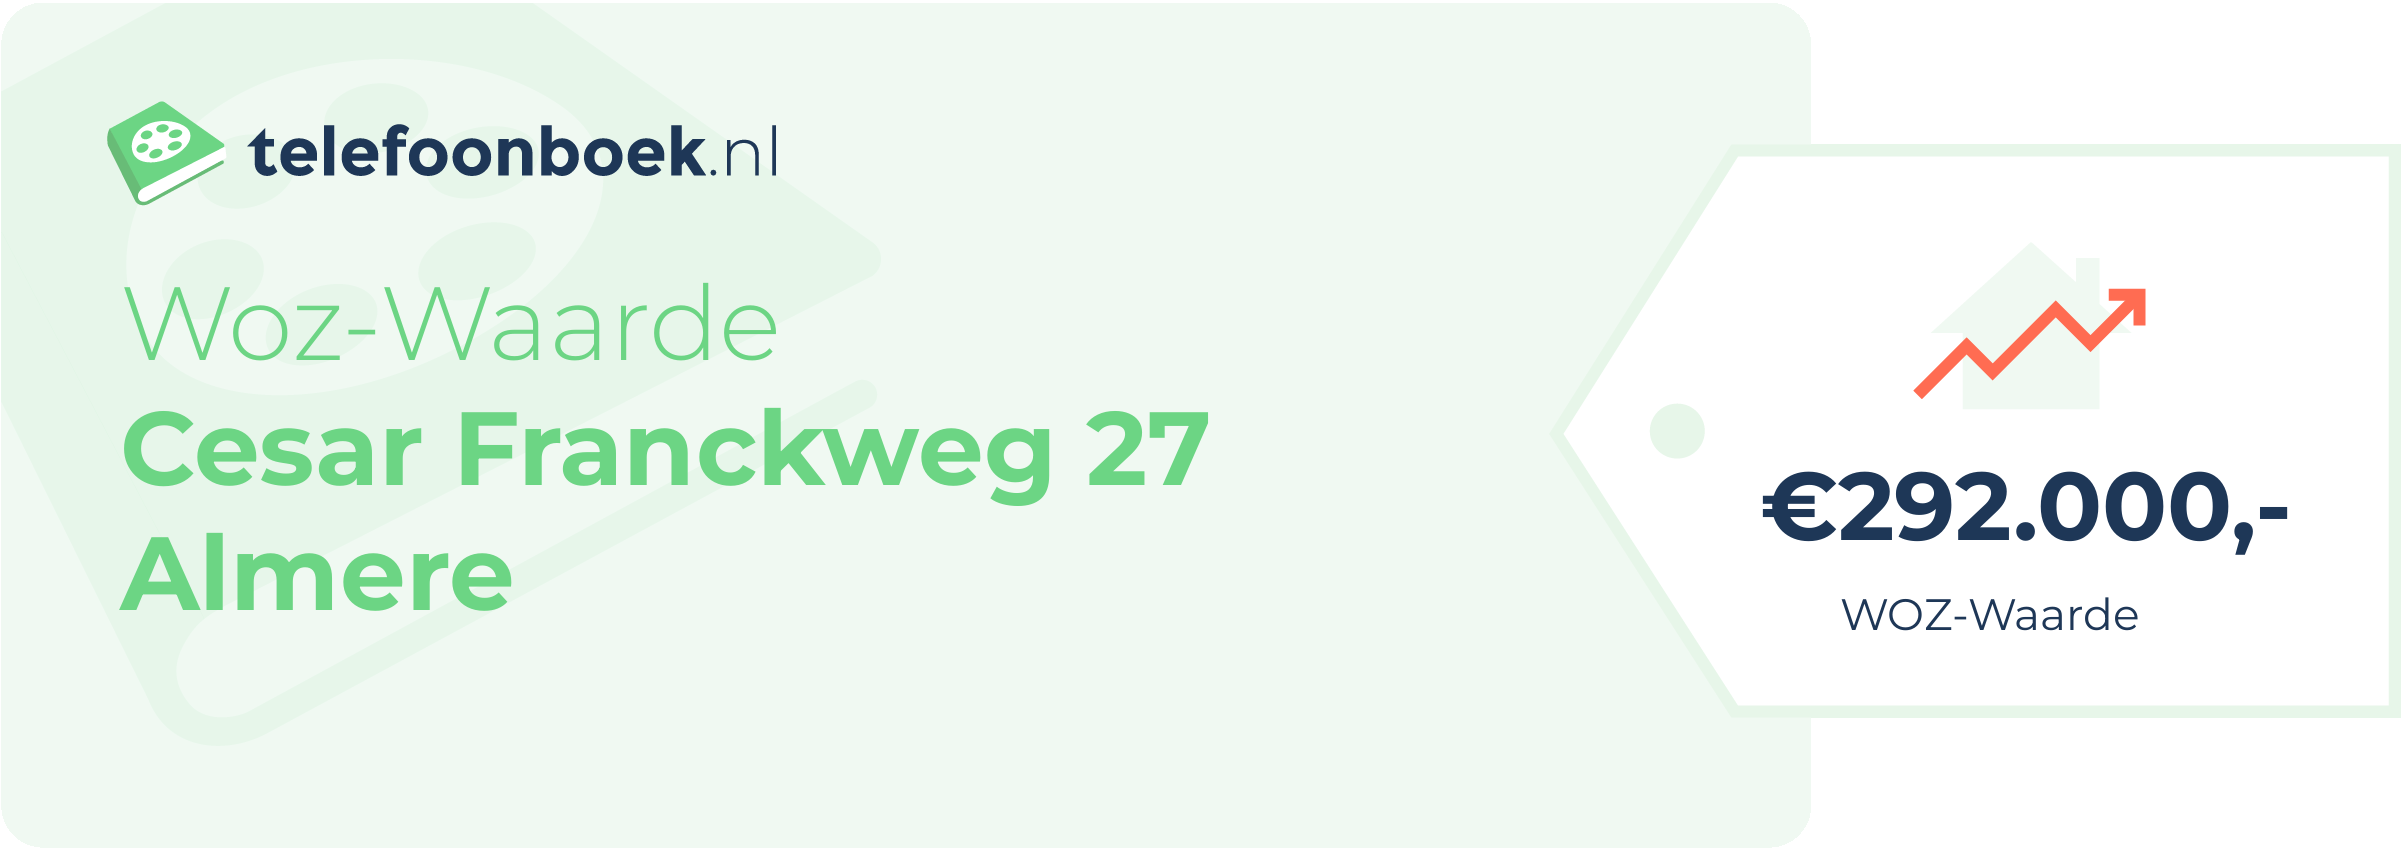 WOZ-waarde Cesar Franckweg 27 Almere